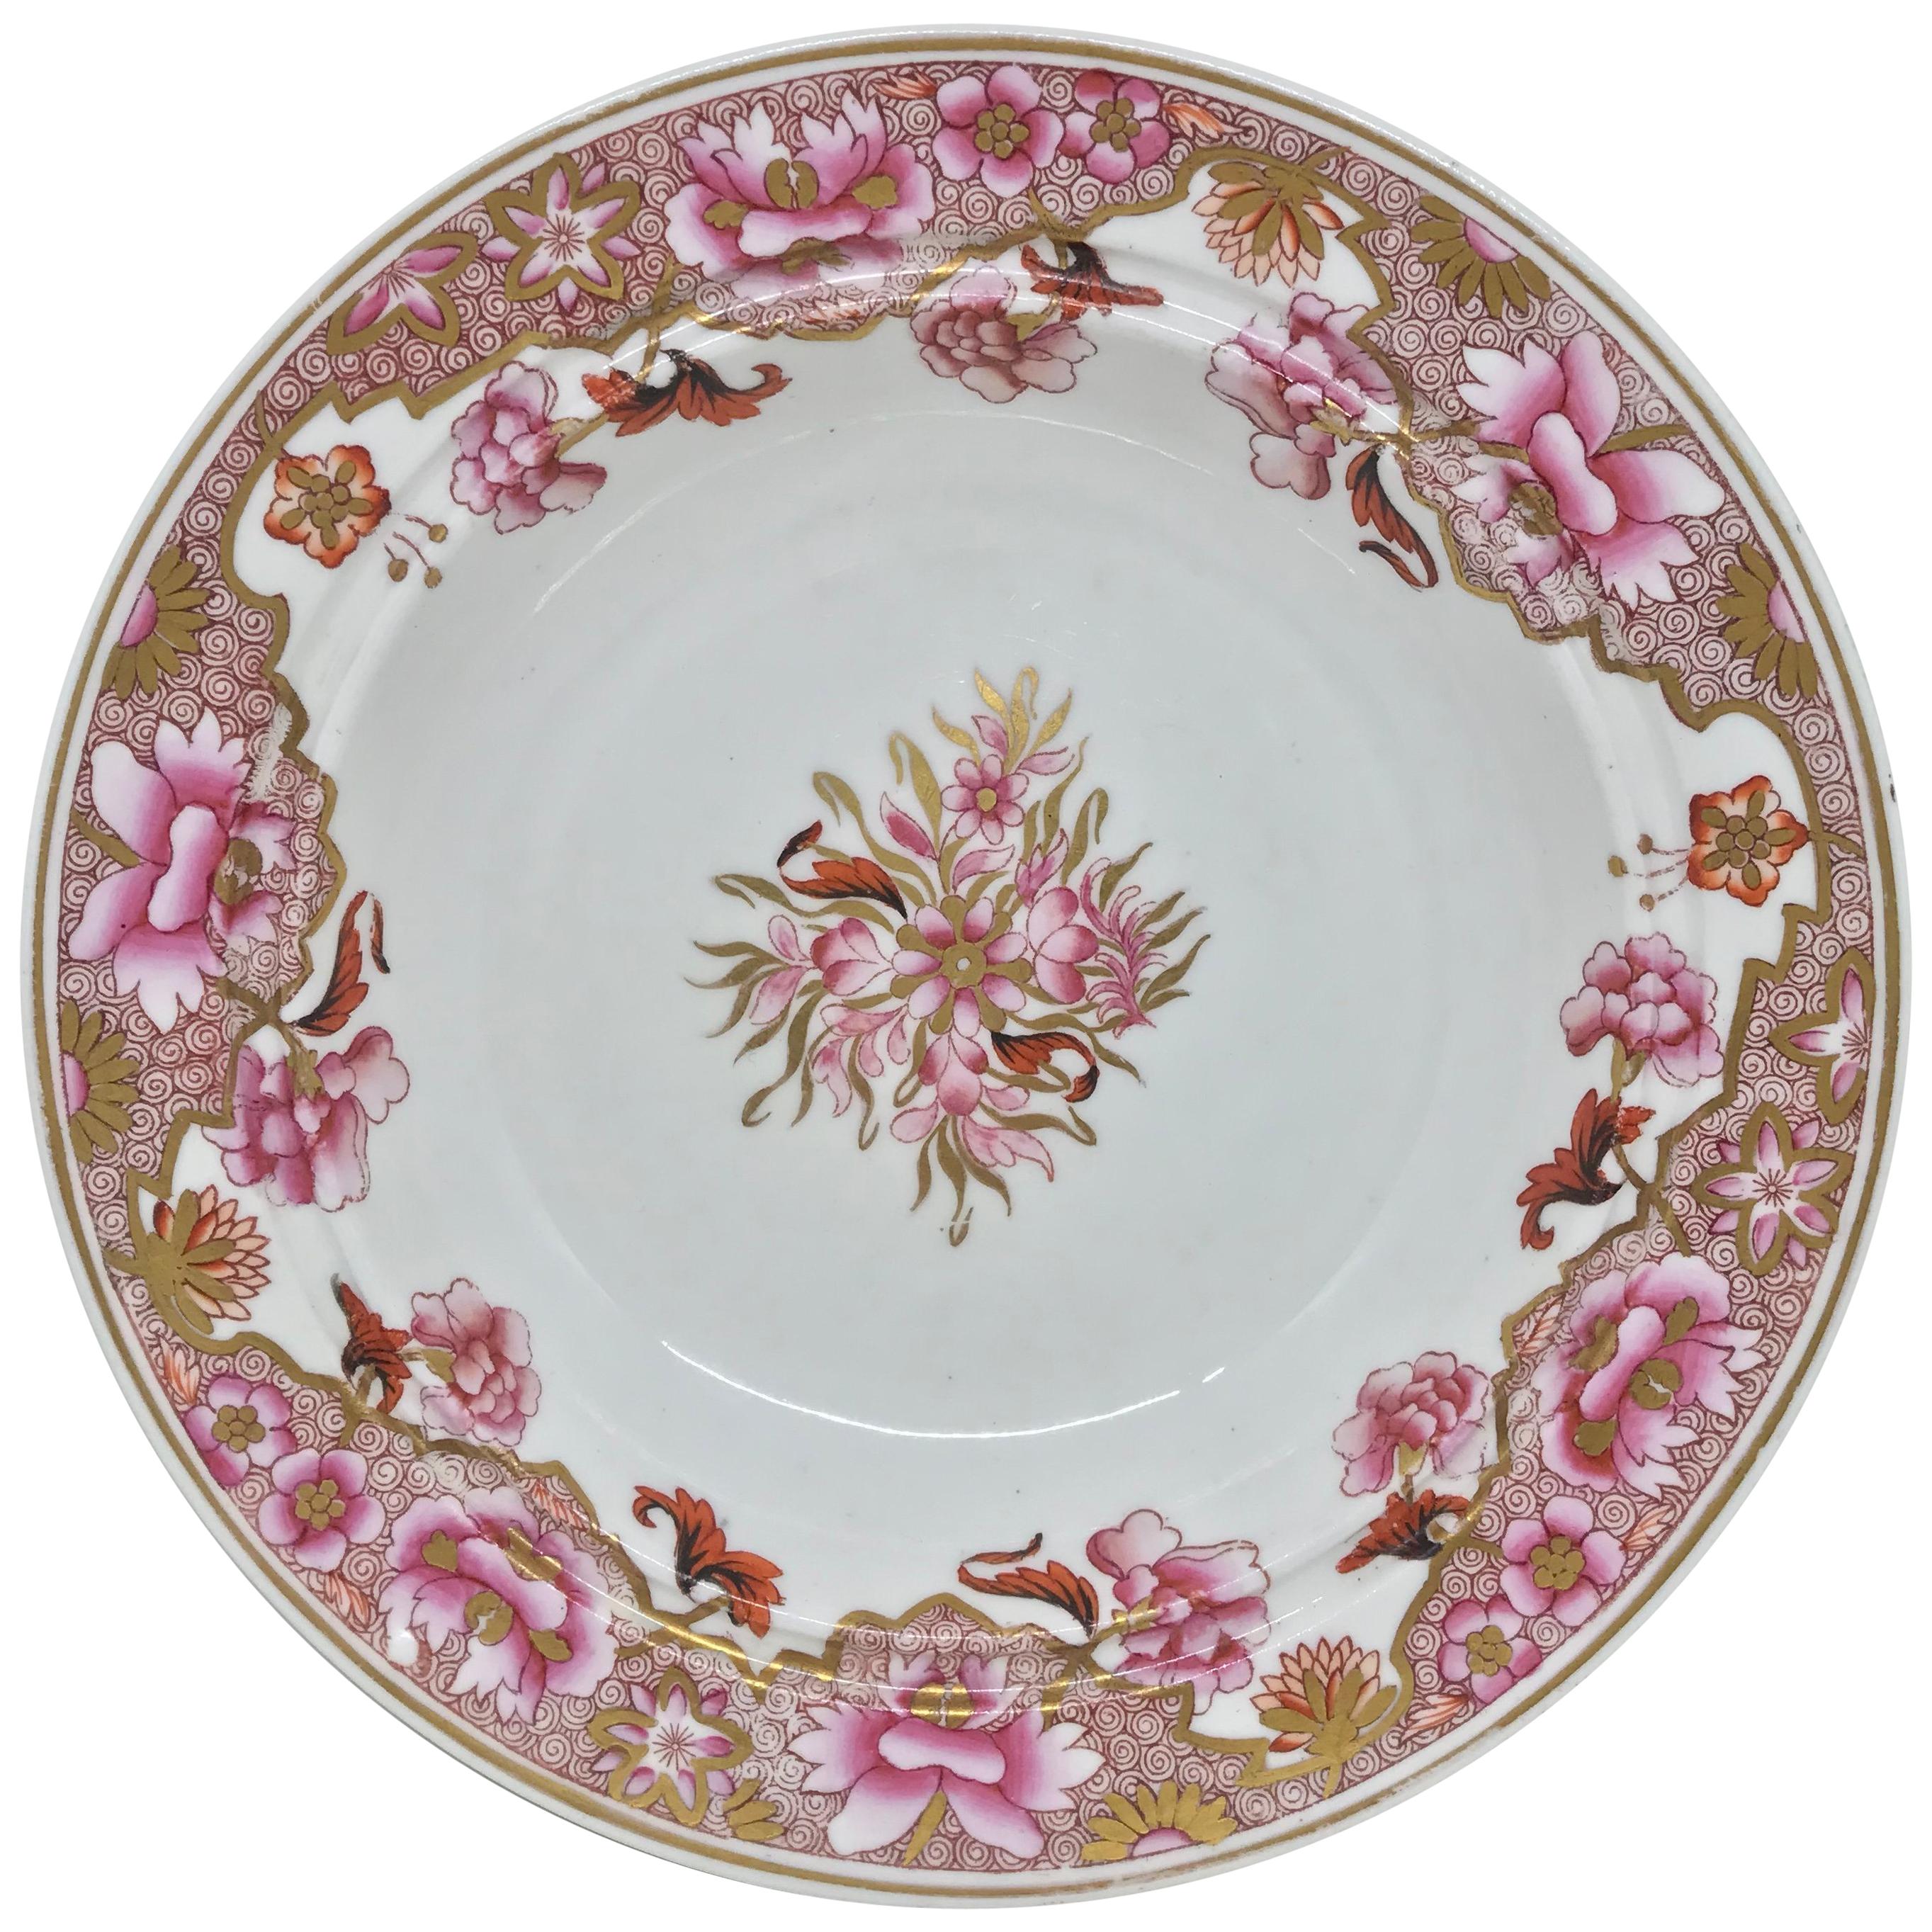 Spode Pink and Gilt Plate